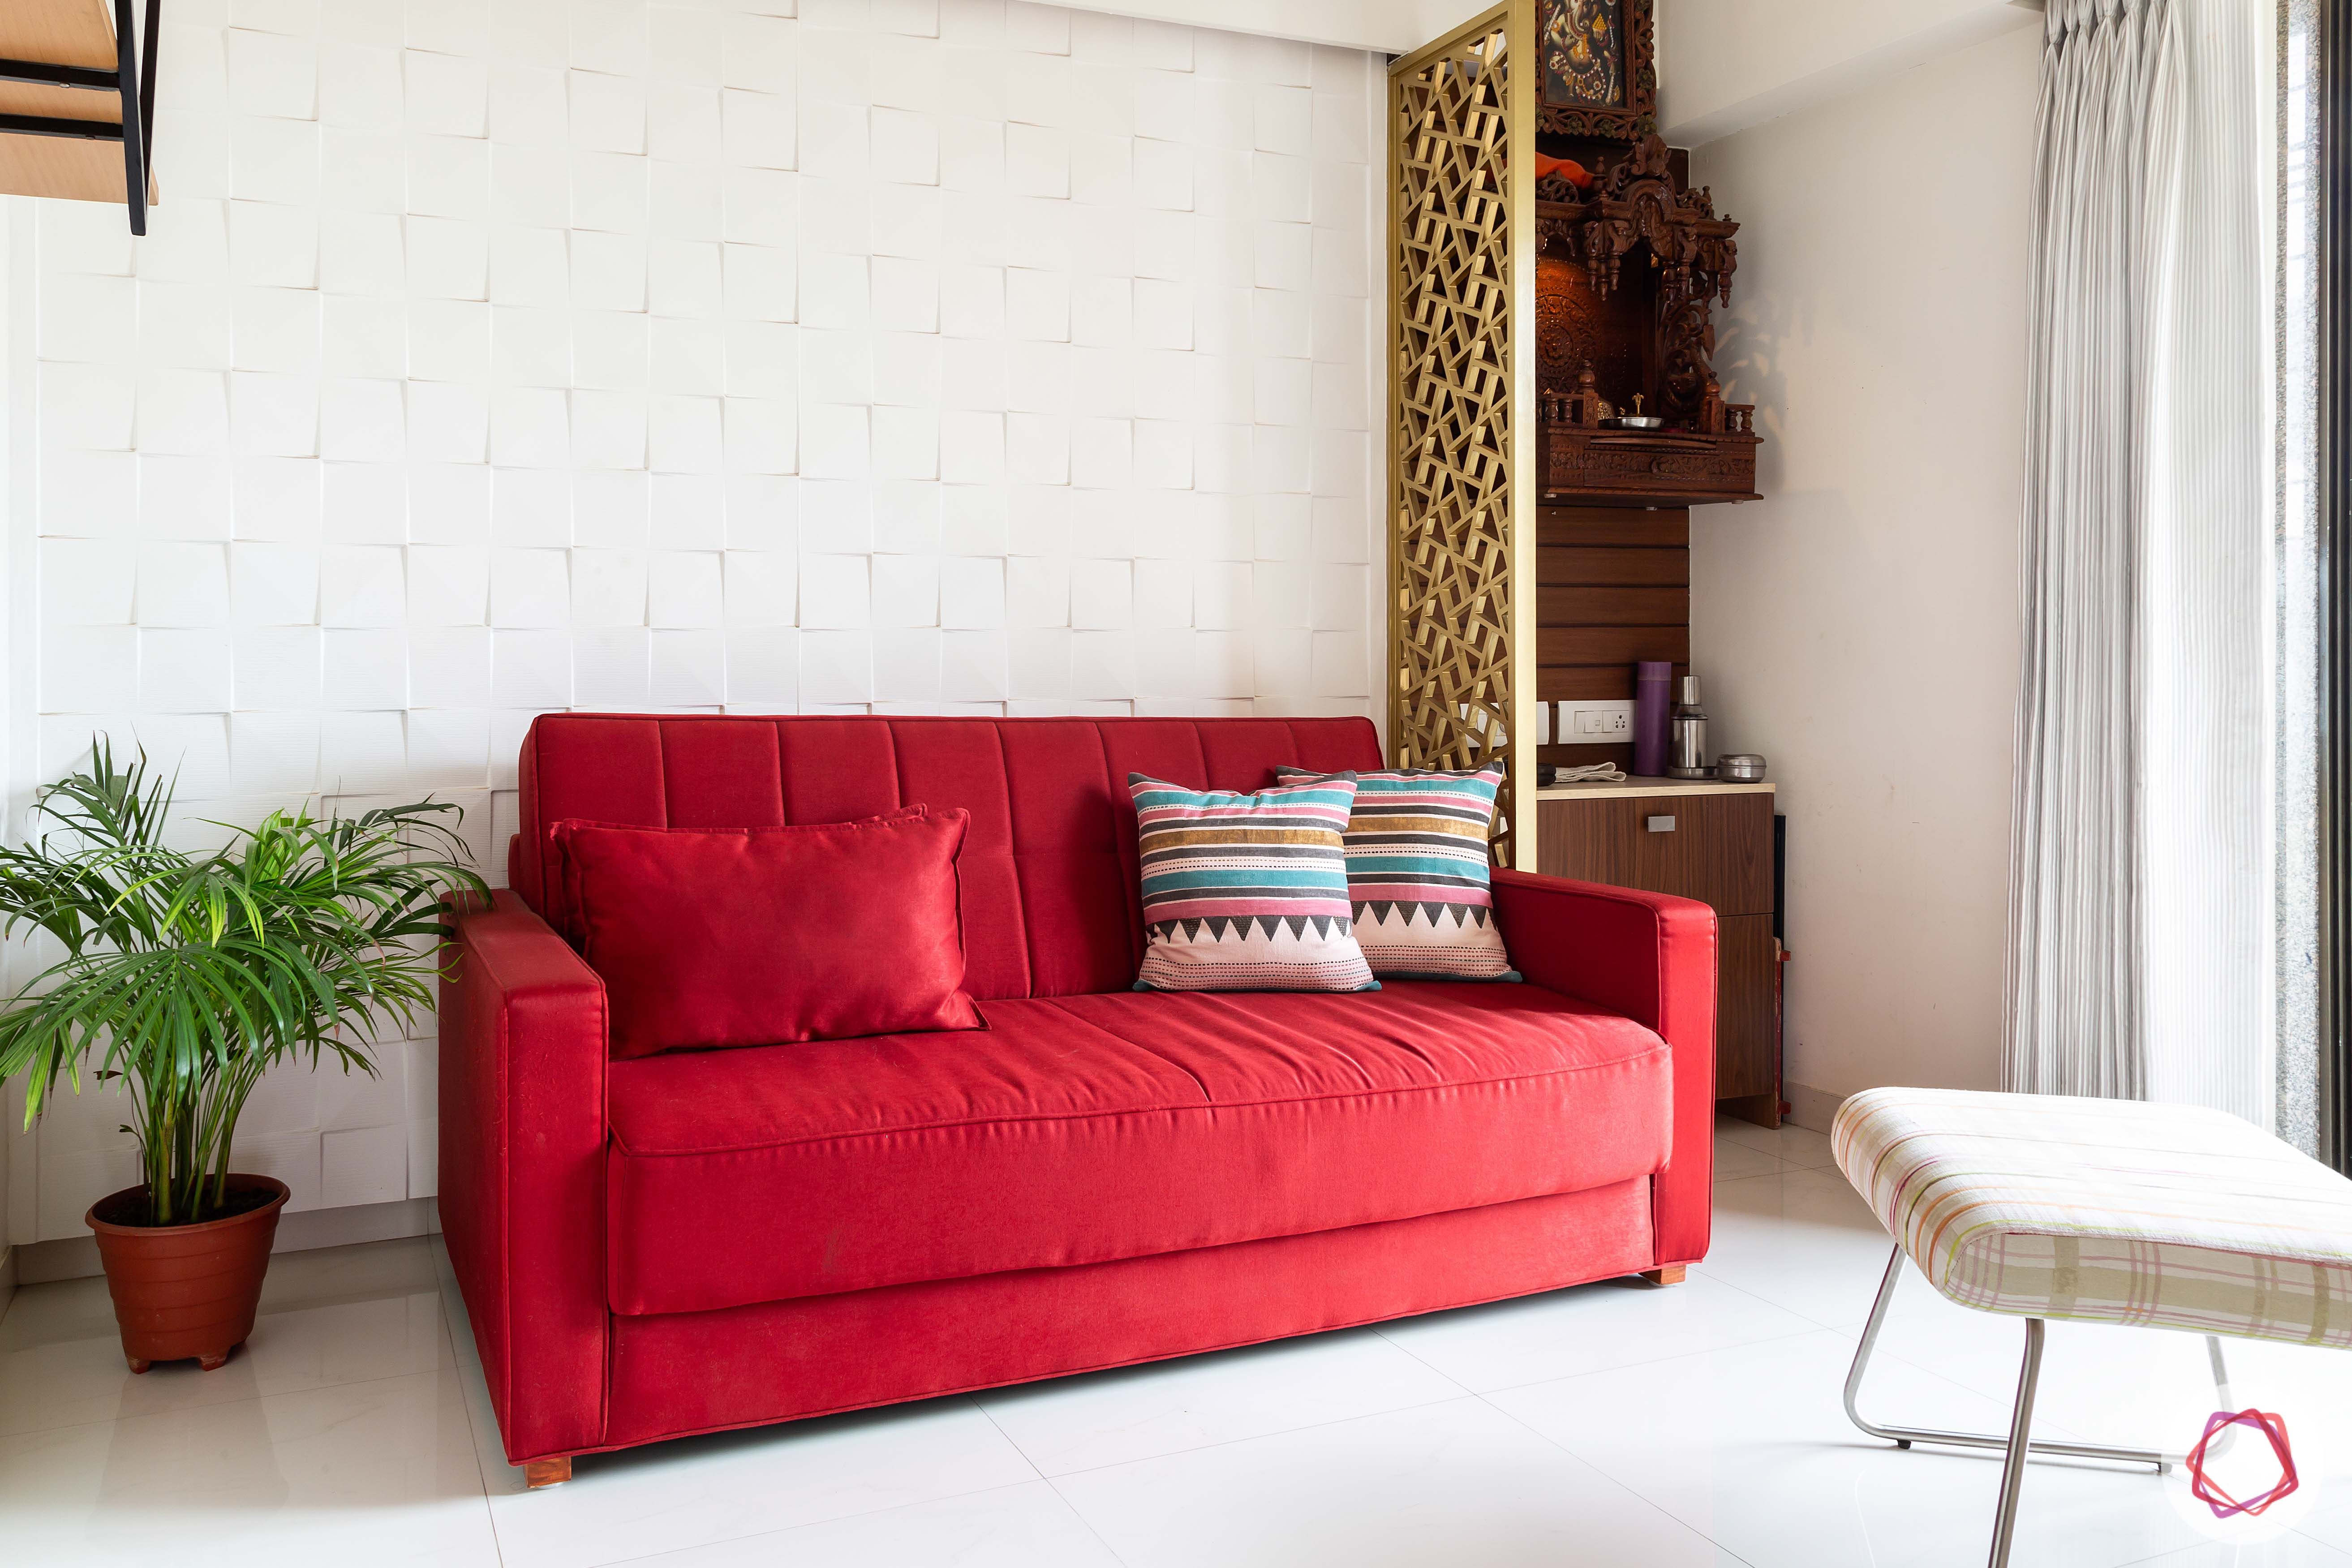 apartment interior design-entertainment room-red couch-pooja unit